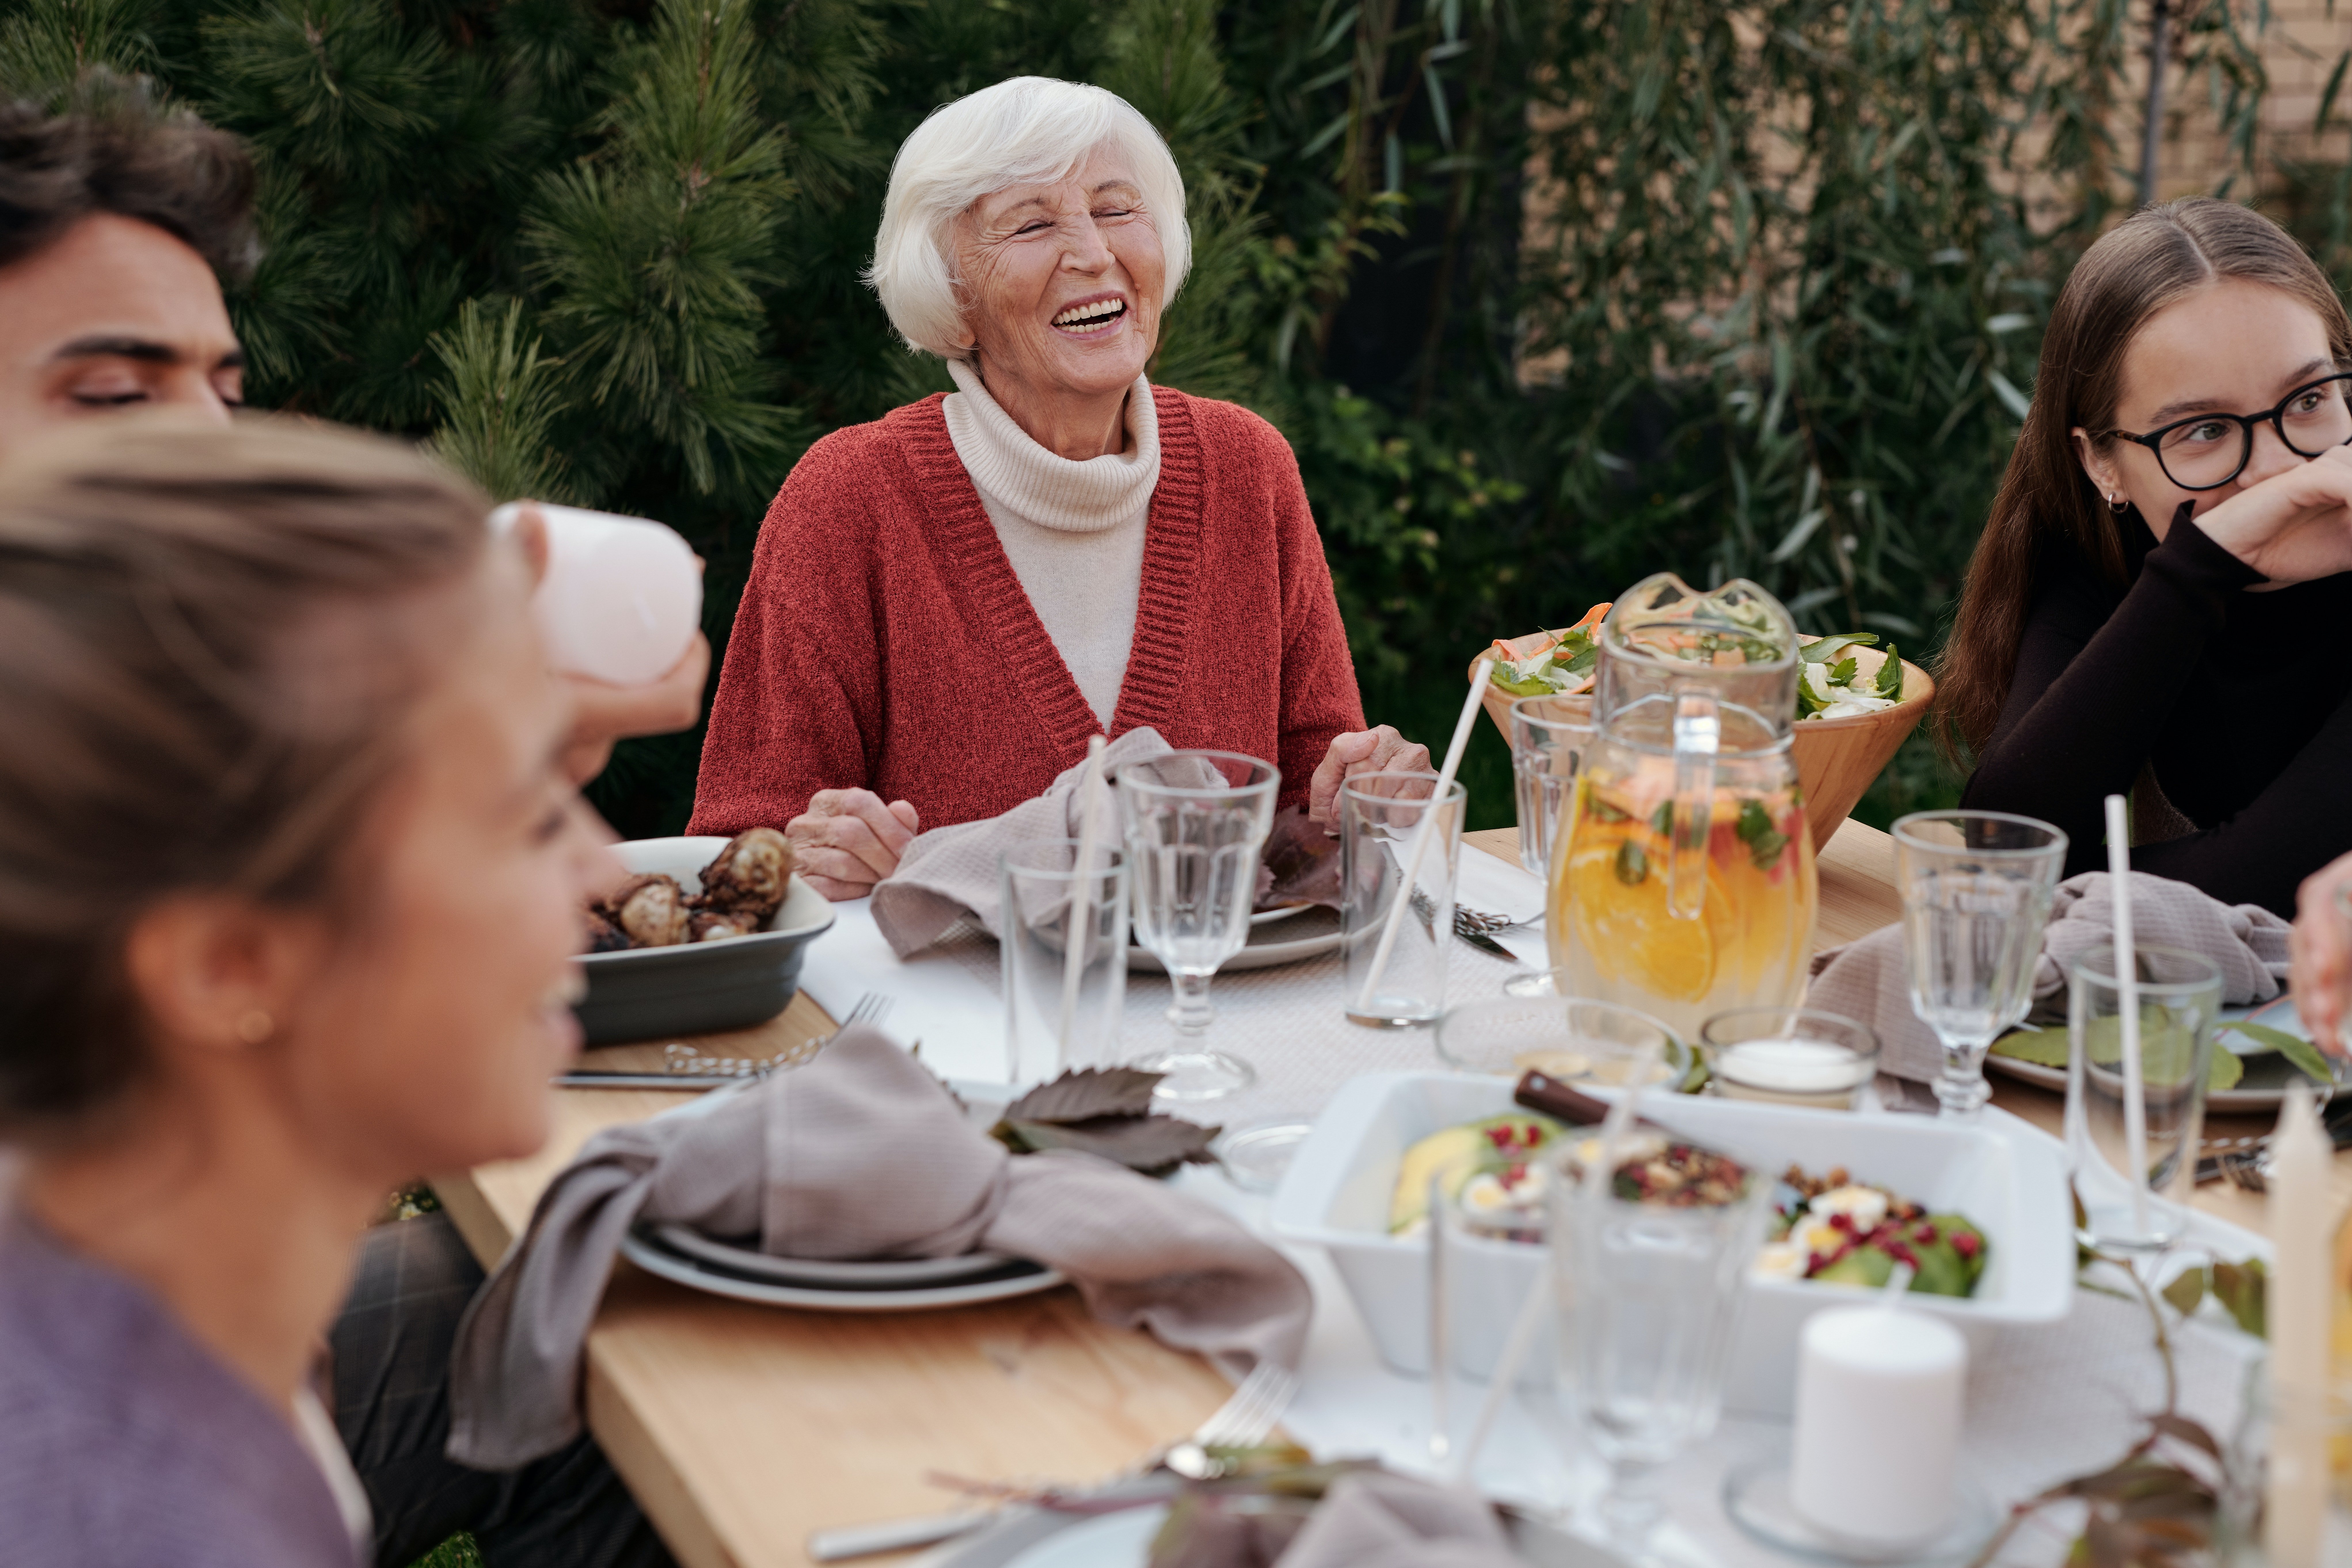 Couple at a weekend dinner with grandma | Photo: Pexels/askar-abayev